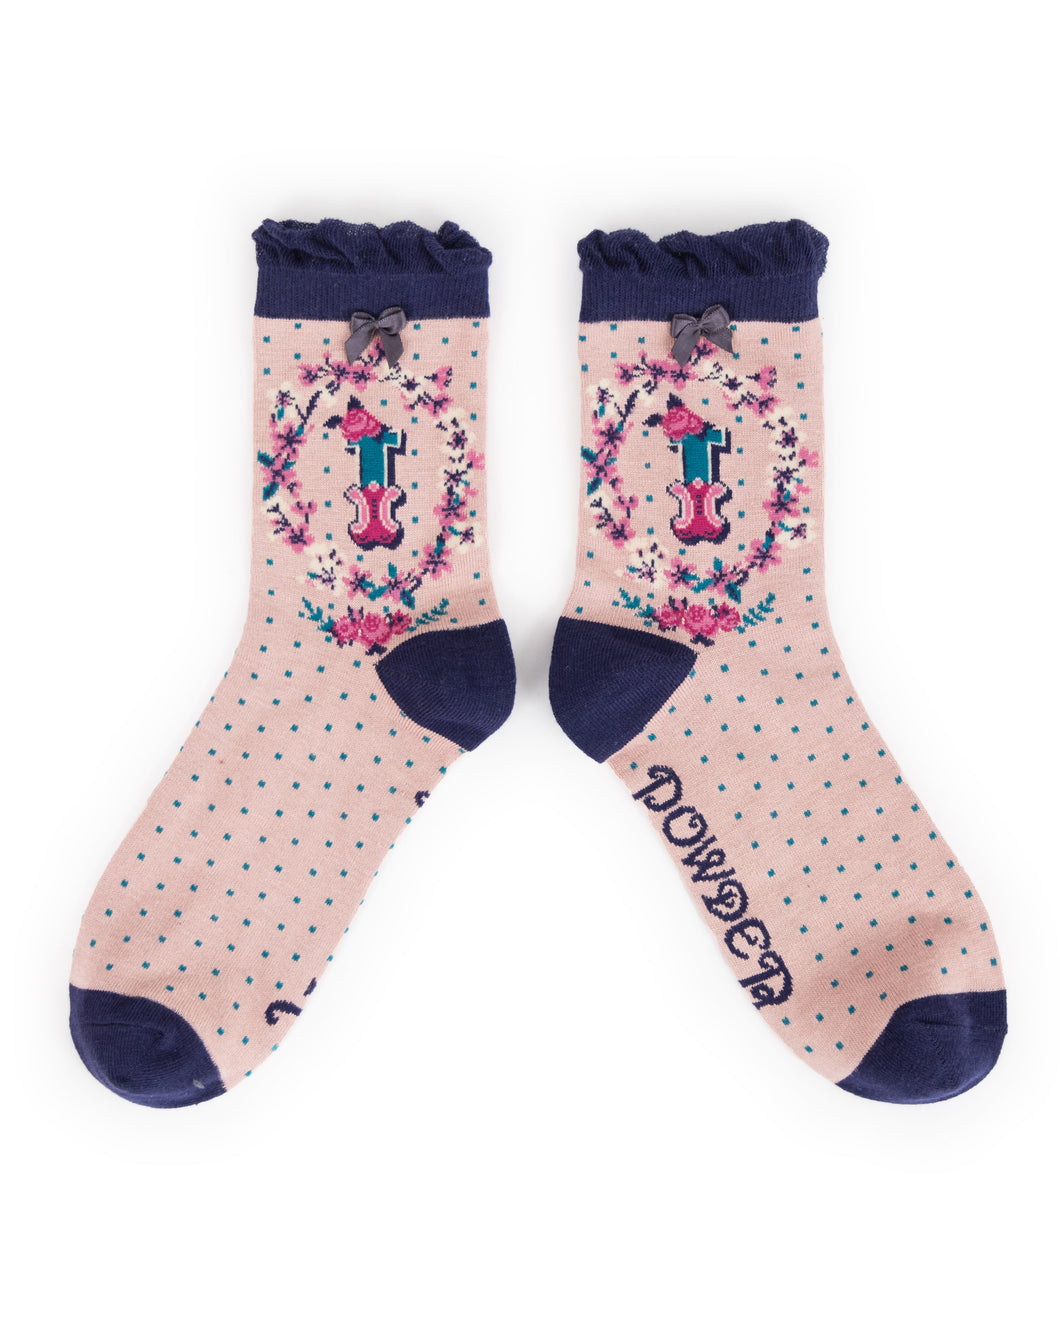 Pair of Ladies Powder Socks I